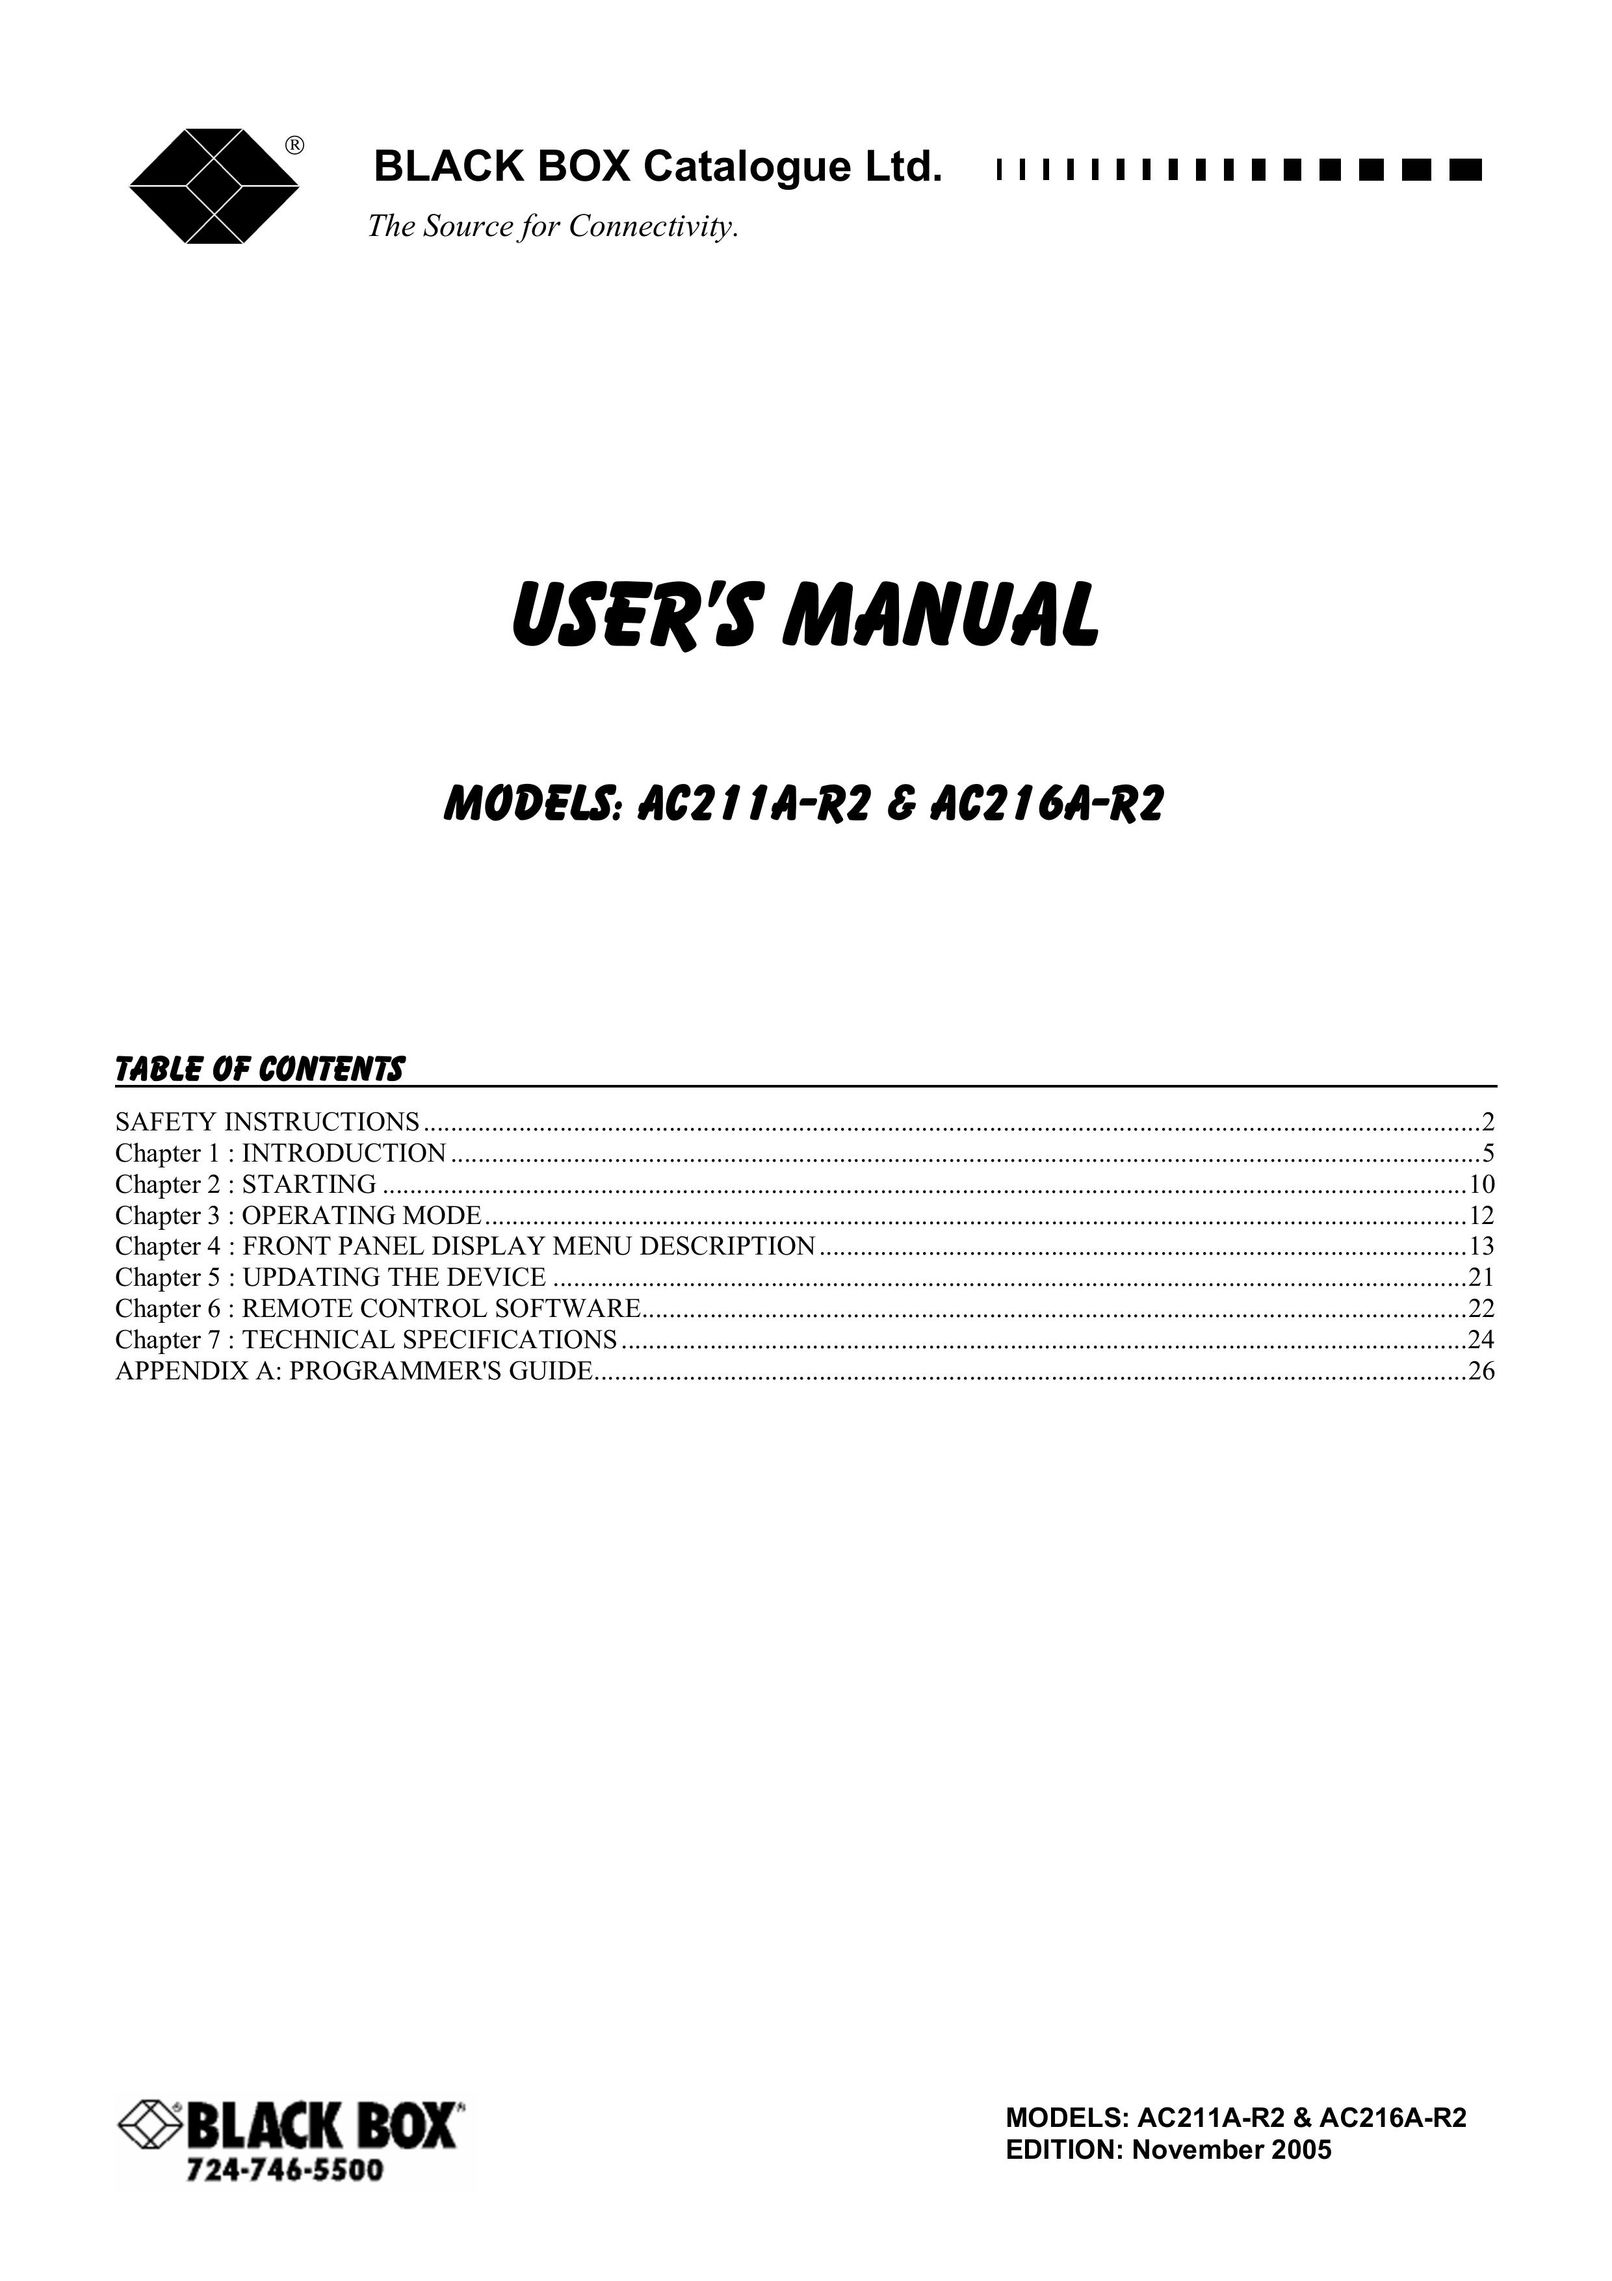 Black Box AC211A-R2 Cable Box User Manual